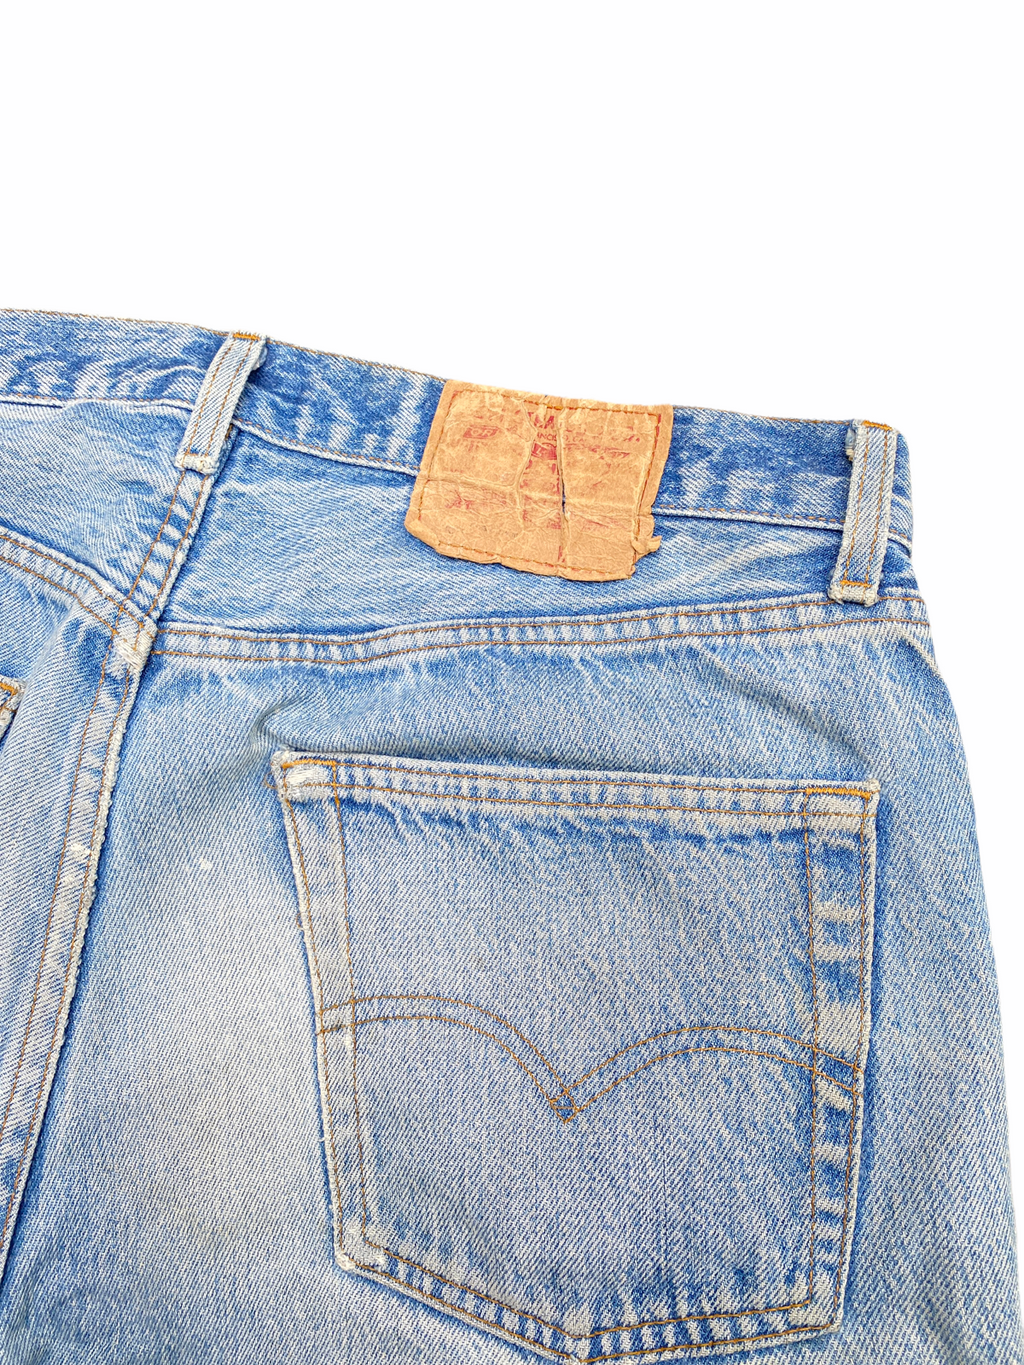 One of a Kind  501 Vintage Made in France denim jeans